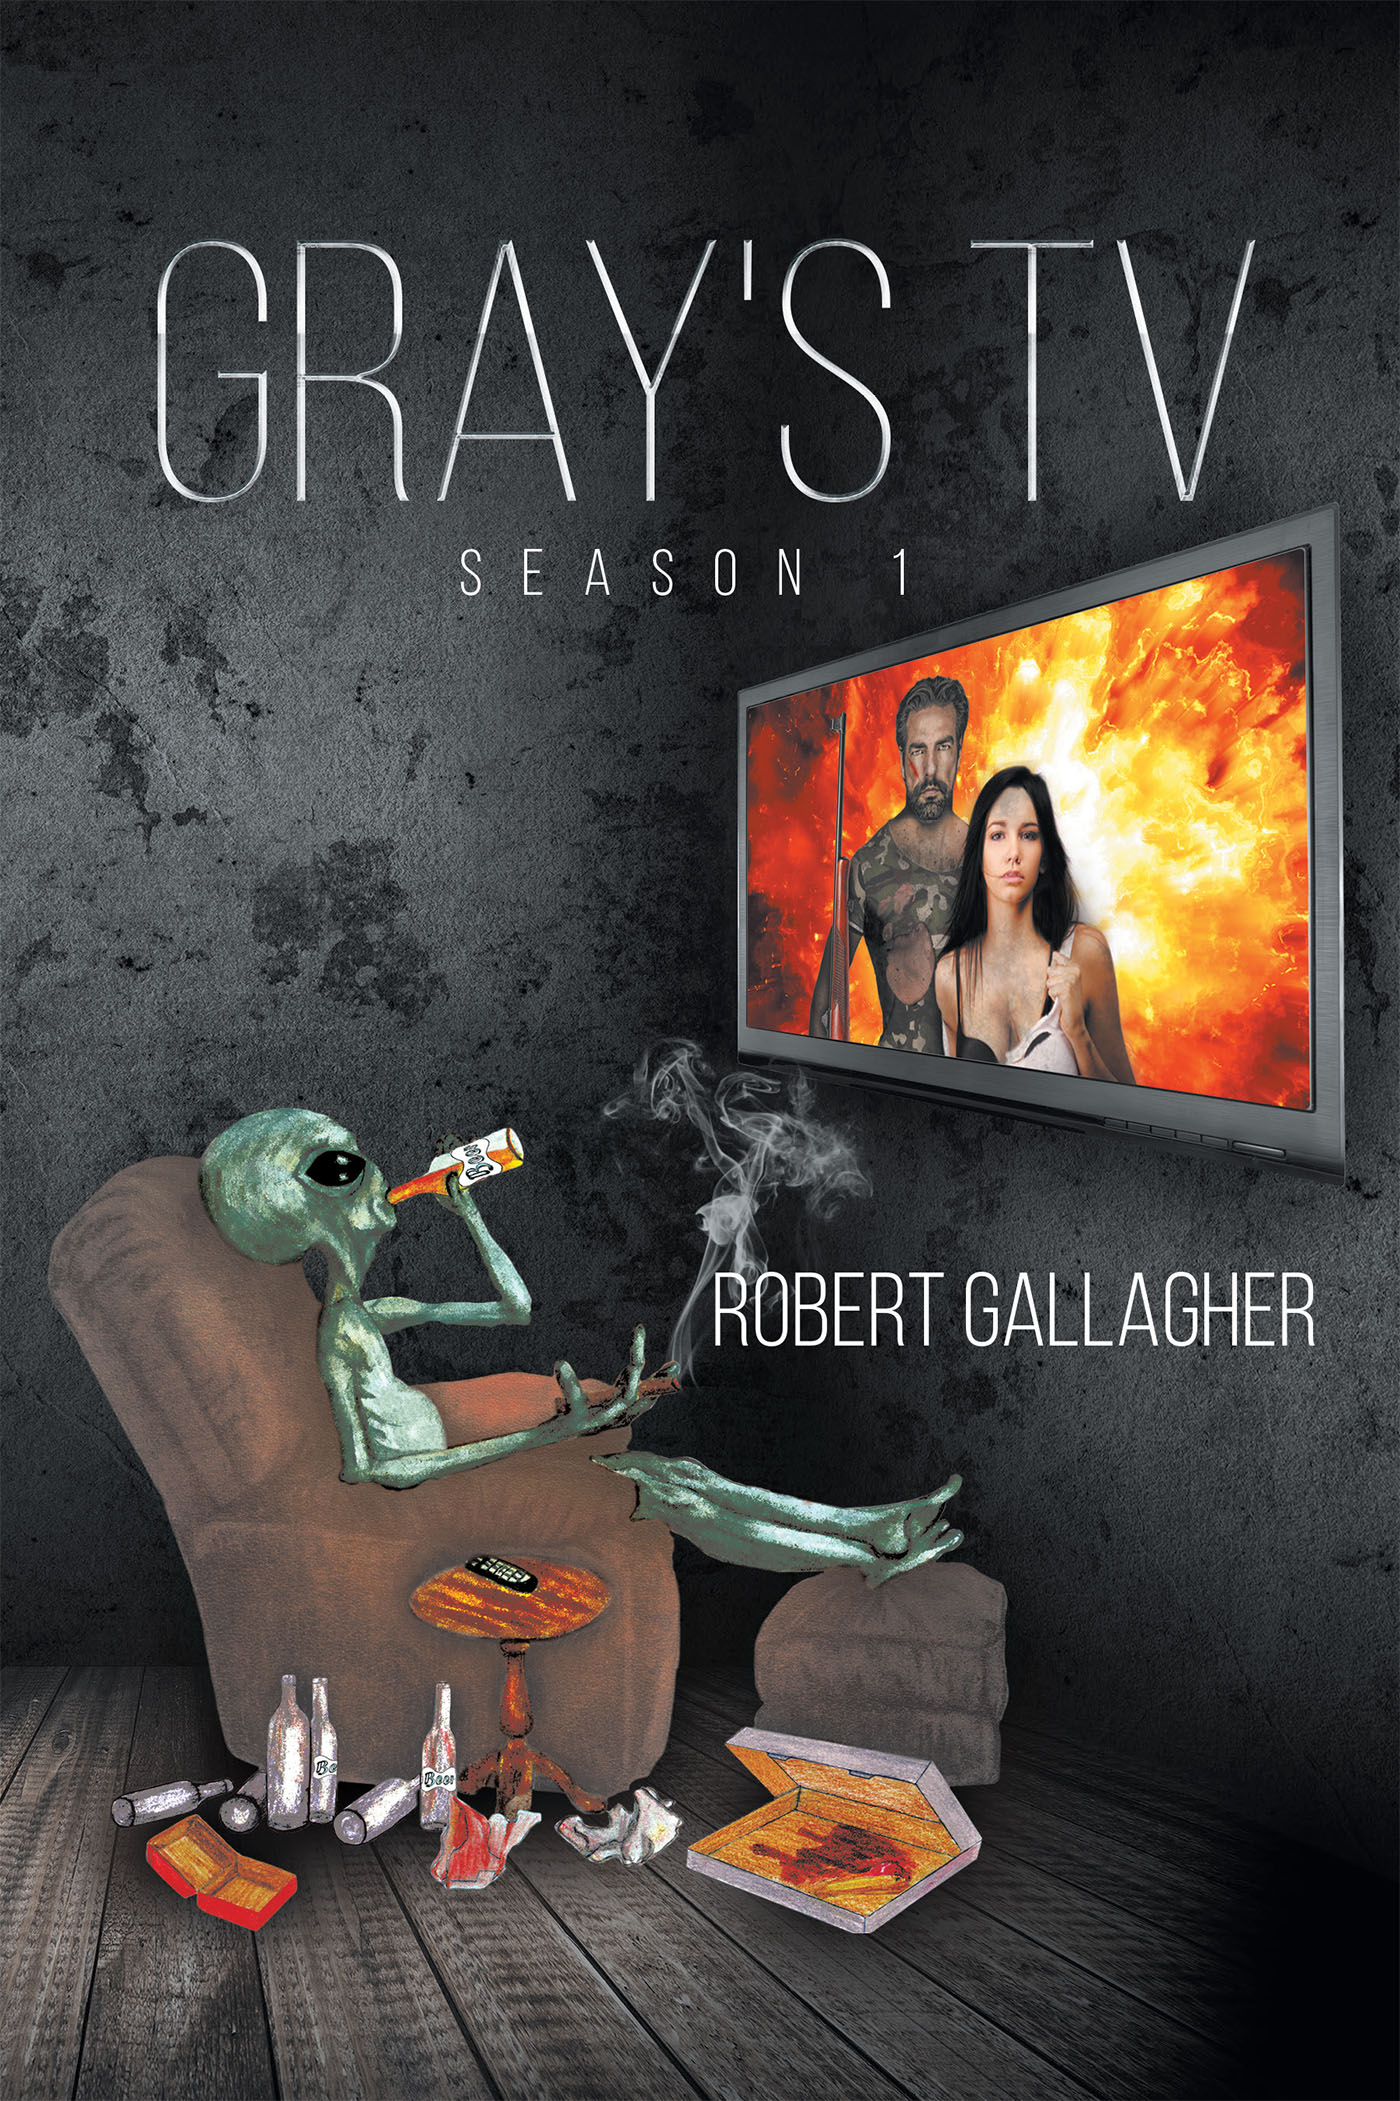 Gray's TV Season 1 Cover Image